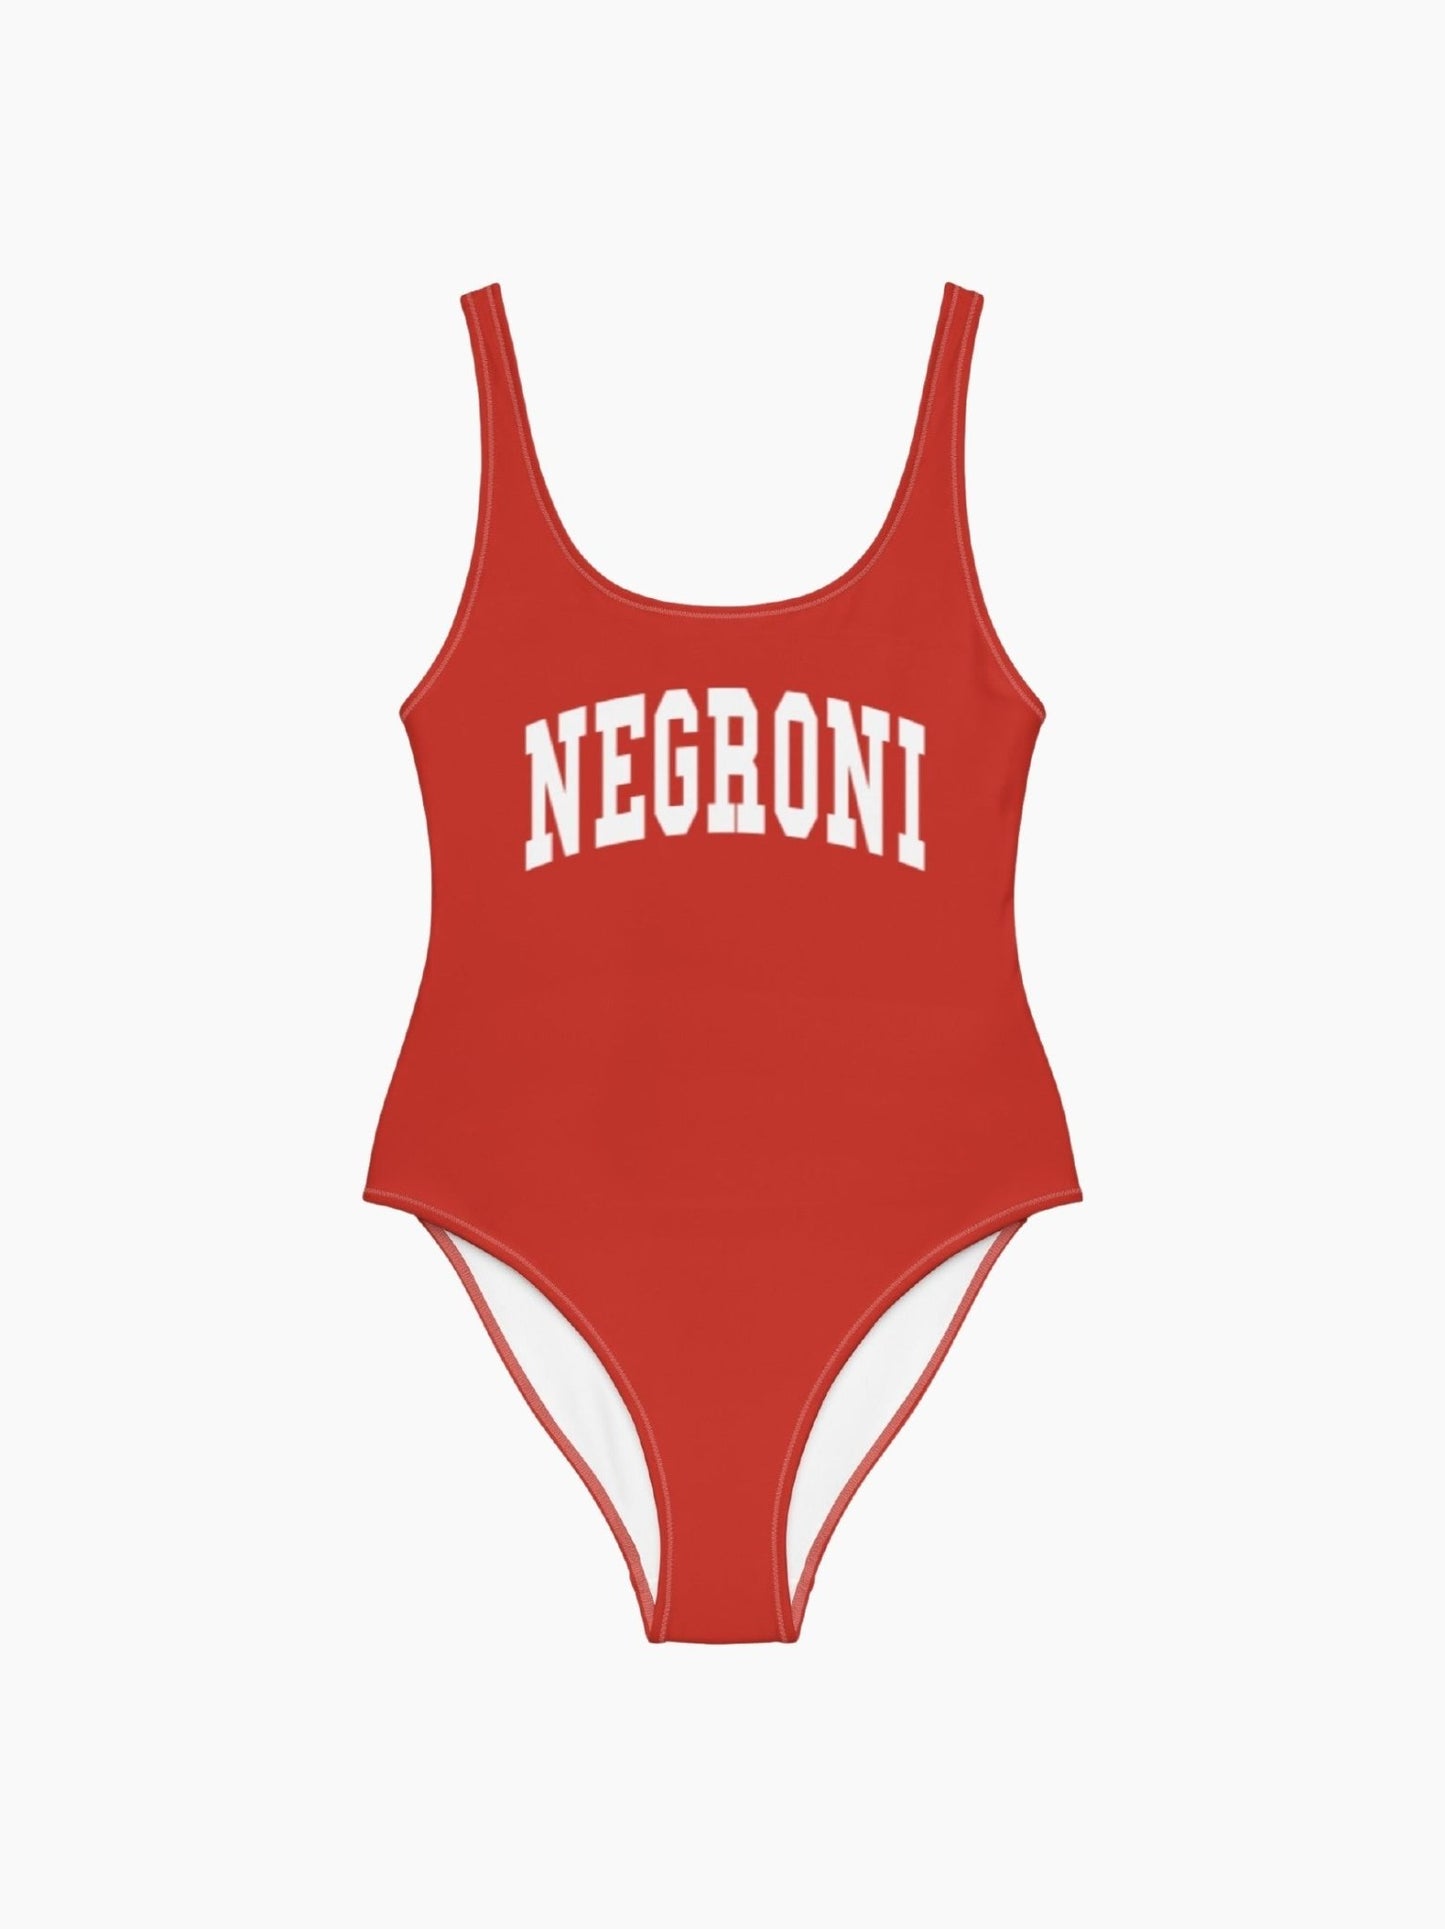 Negroni Swimsuit